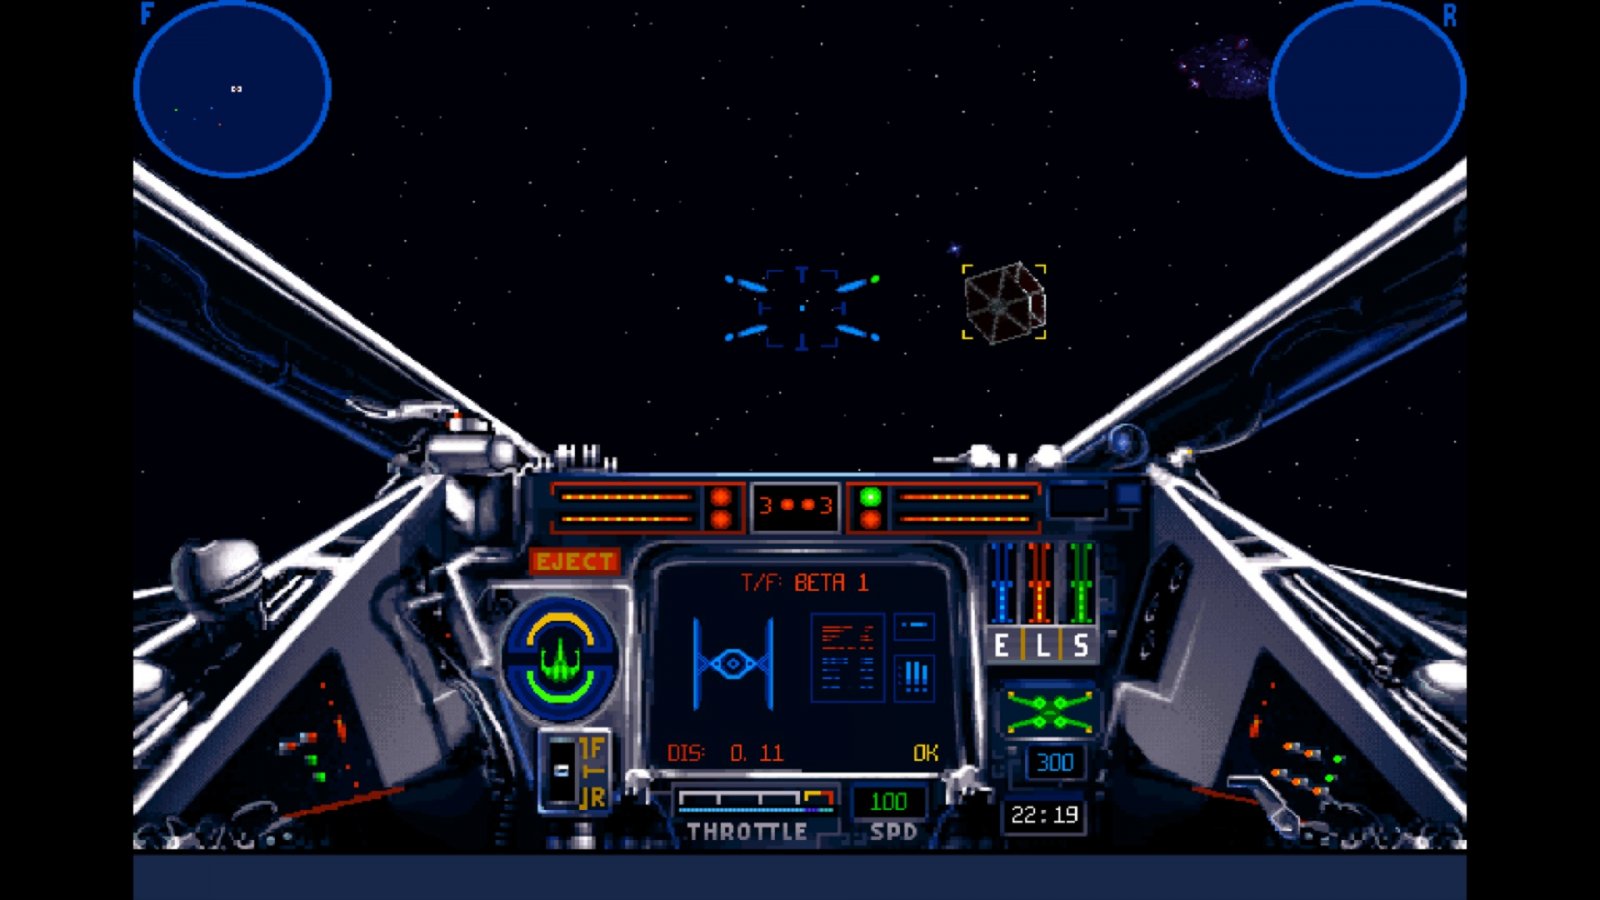 Star Wars: X-Wing, fan spedì a Lucasarts i floppy fatti a pezzi per la difficoltà di una missione